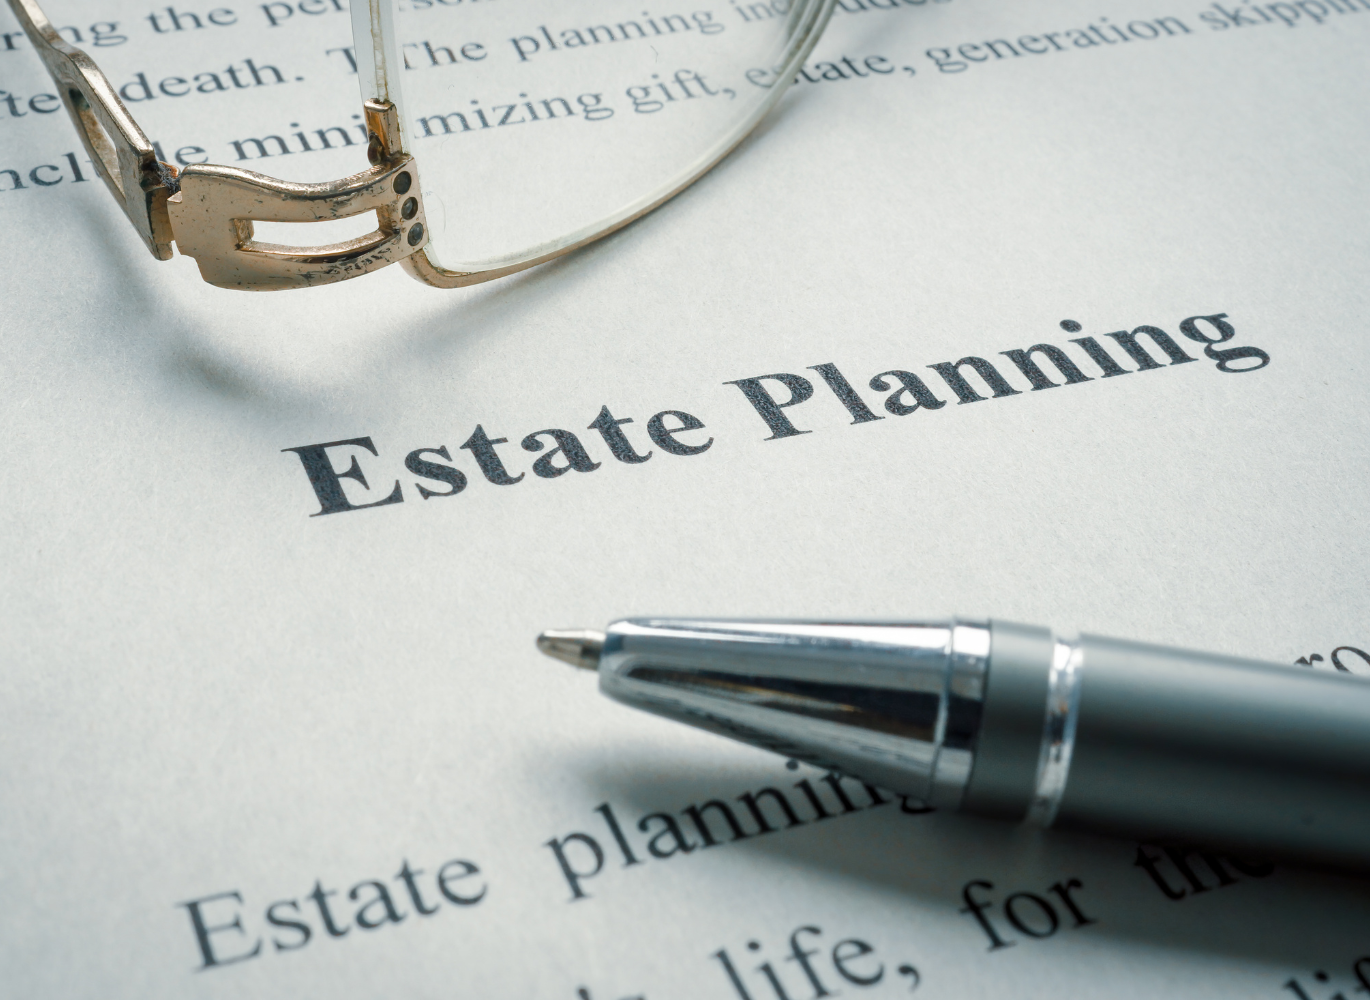 Estate planning written on document